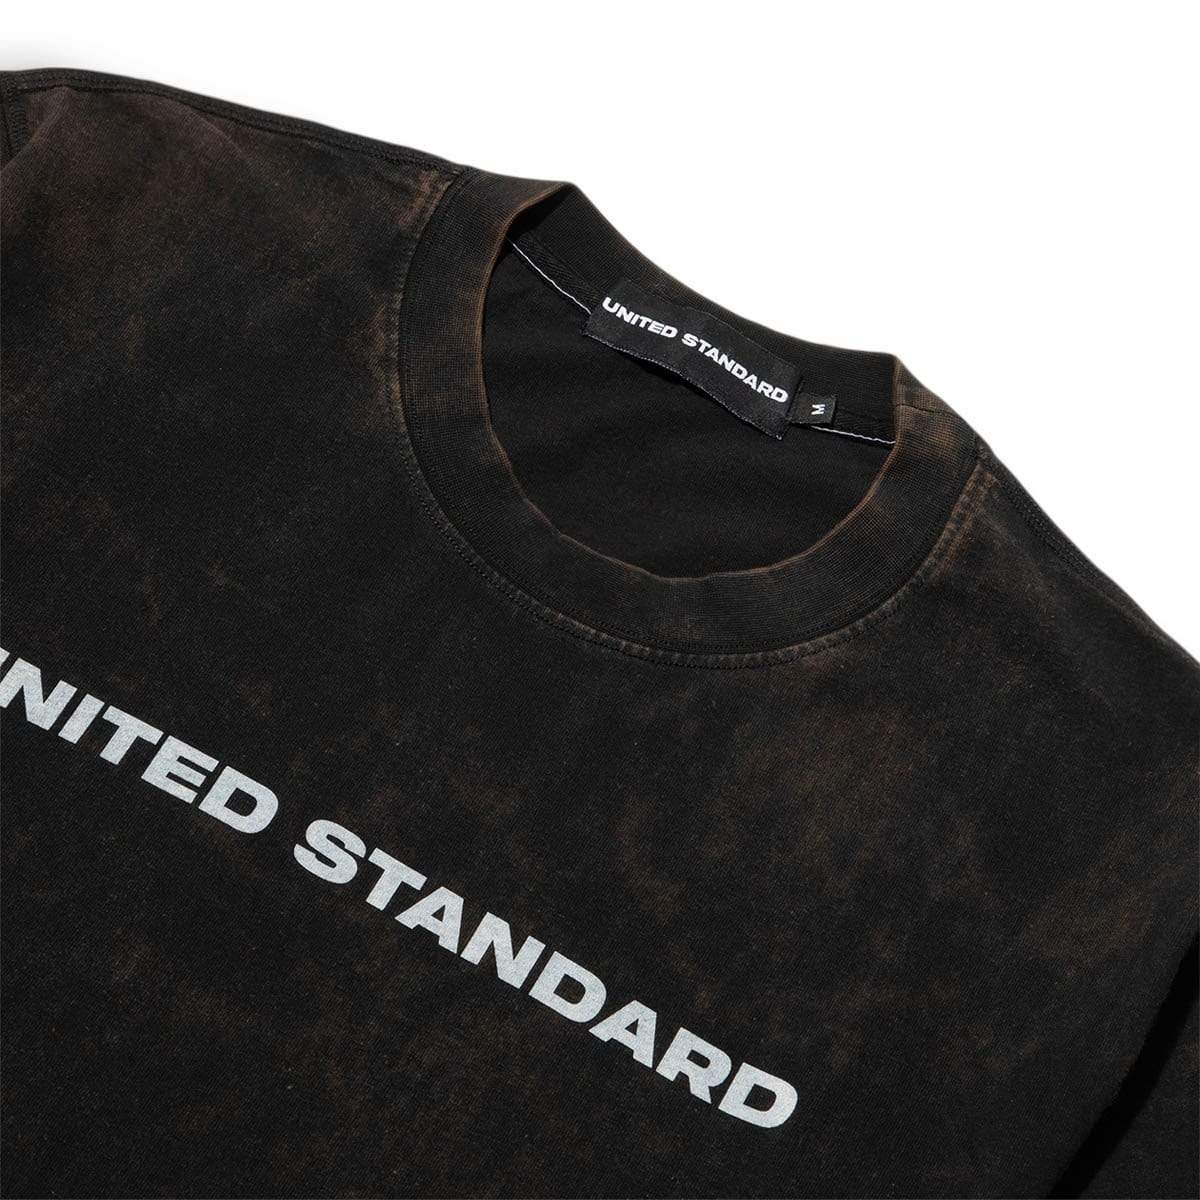 United Standard T-Shirts LOGO ACID T-SHIRT